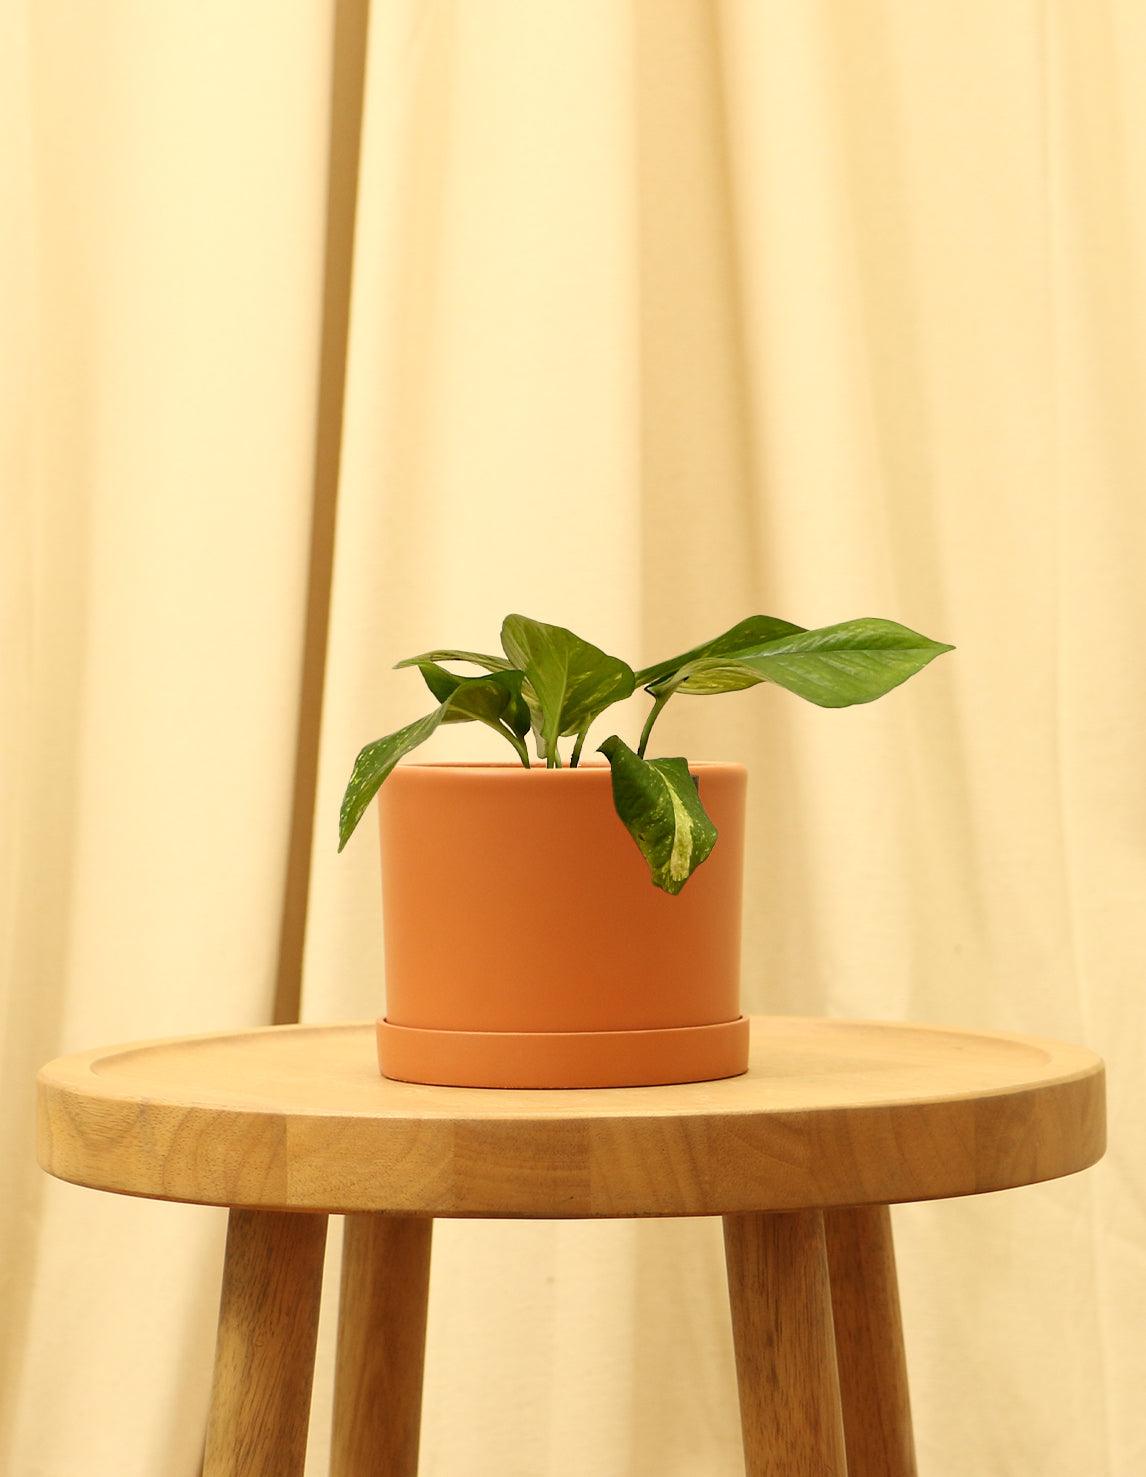 Small Golden Devils Ivy Pothos Plant in orange pot.